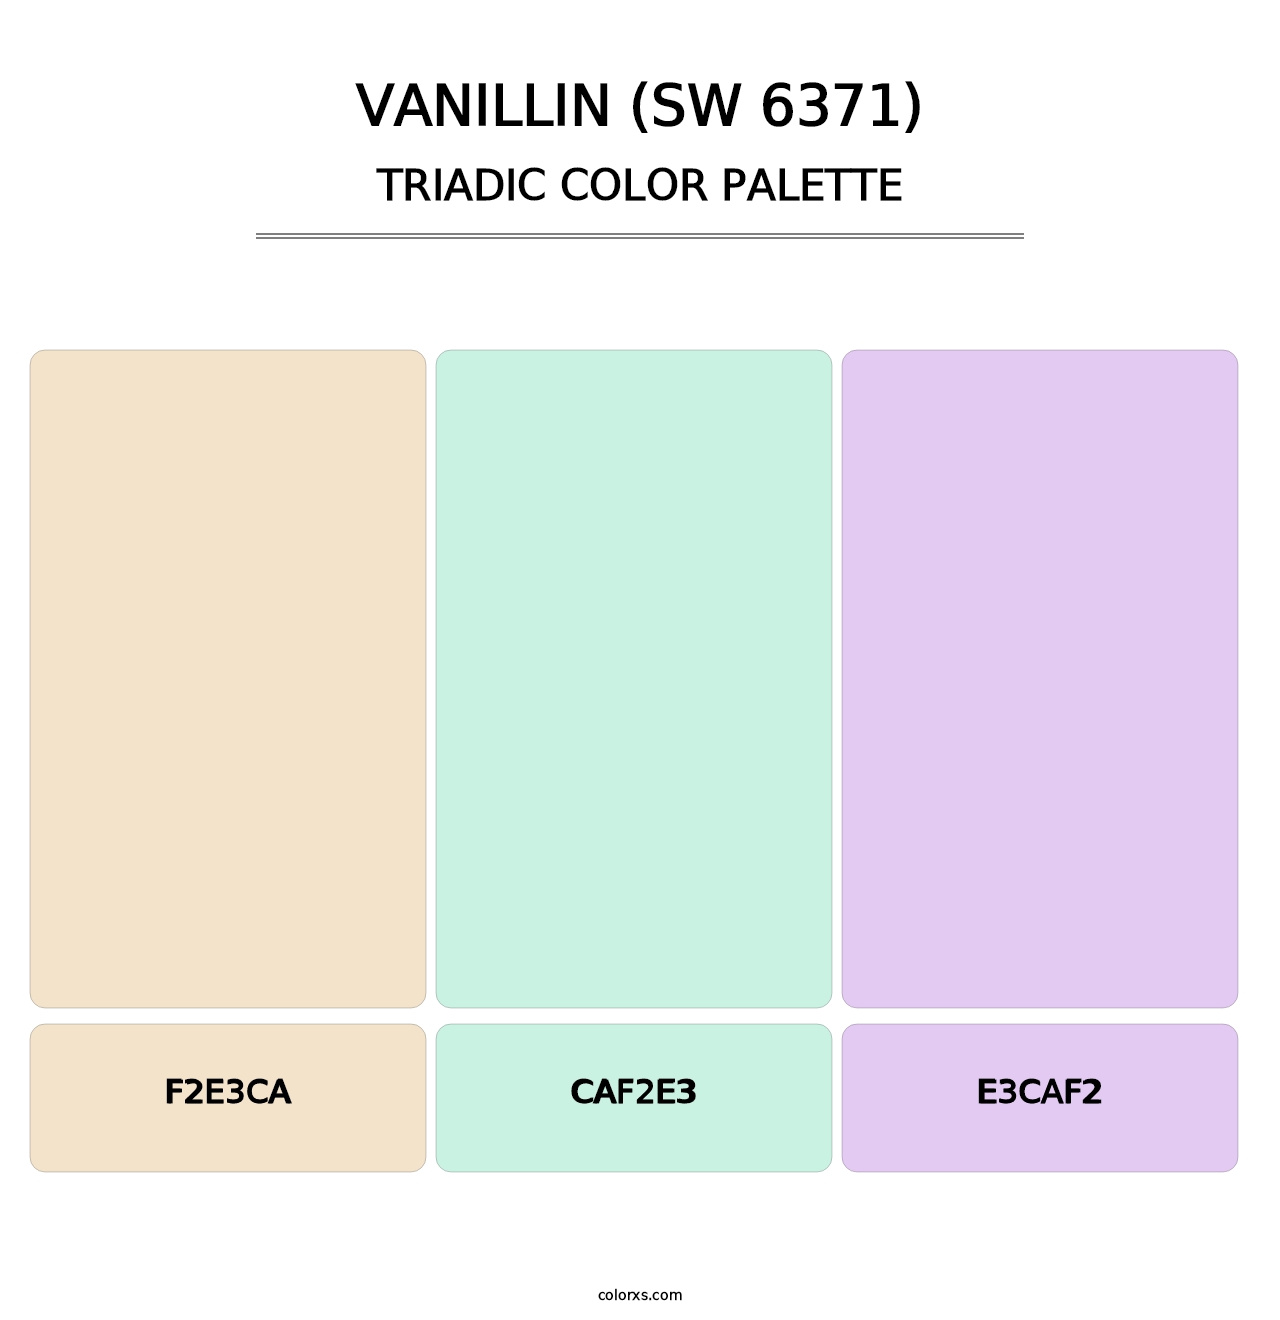 Vanillin (SW 6371) - Triadic Color Palette